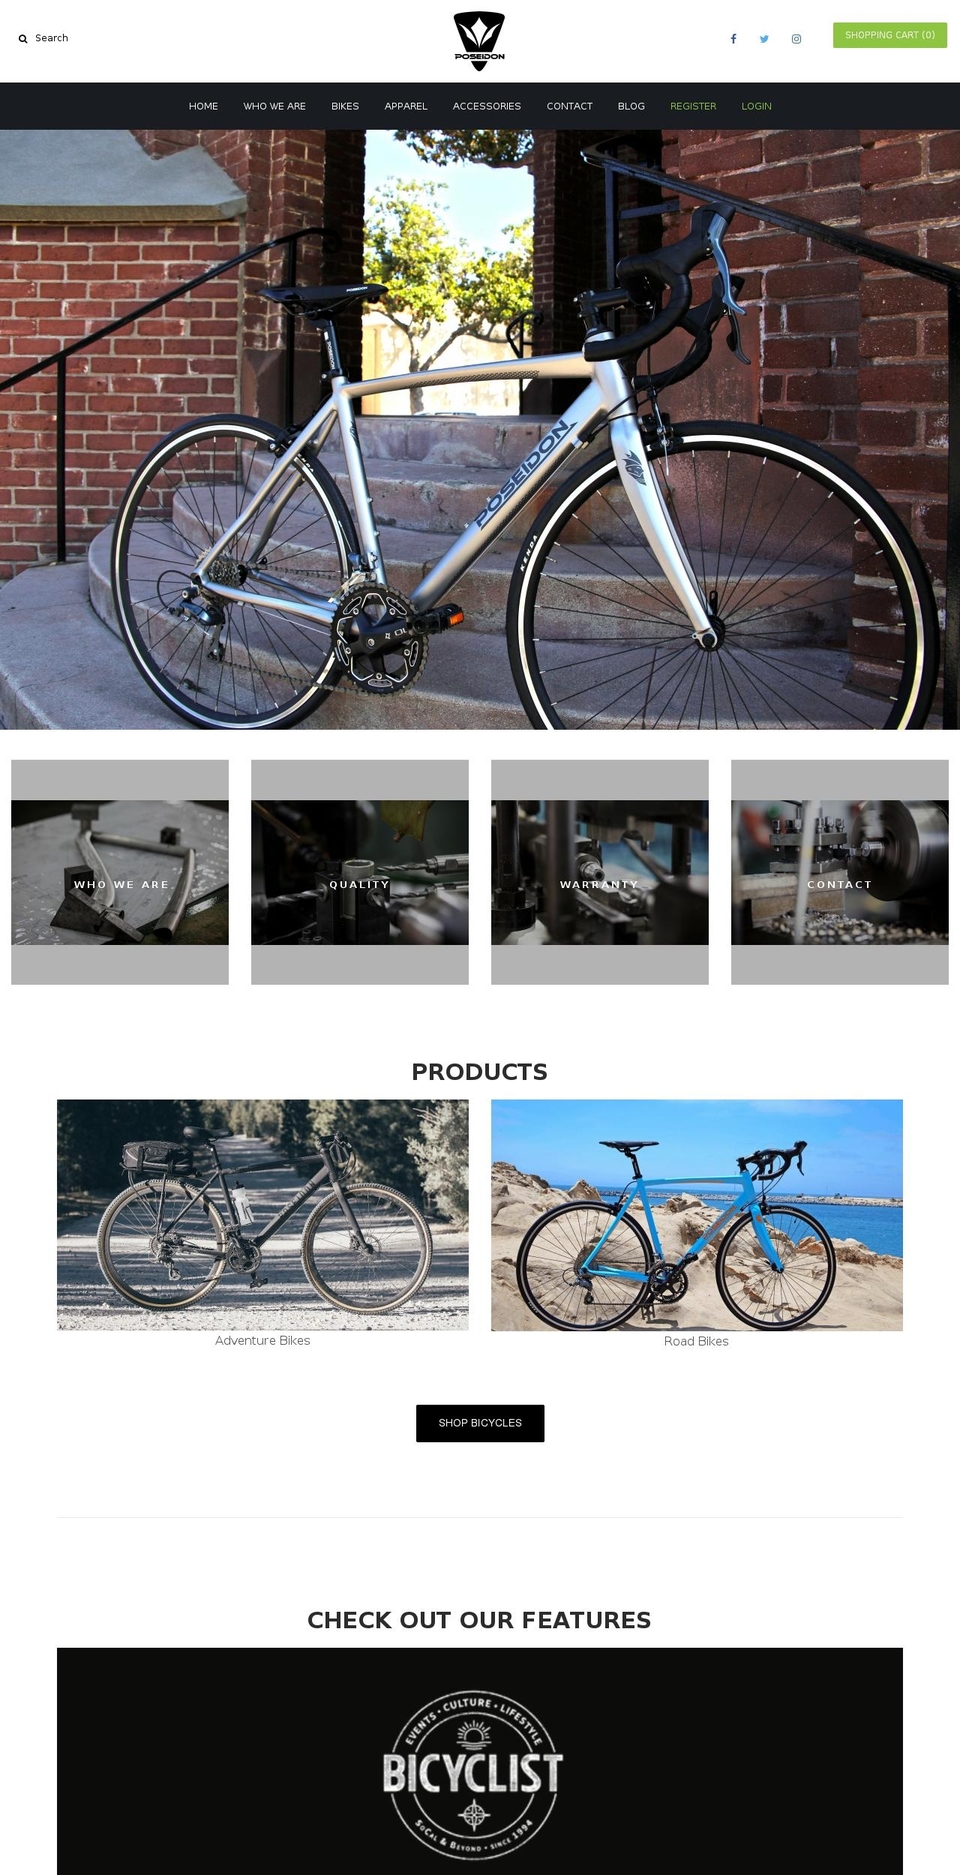 poseidon.bike shopify website screenshot